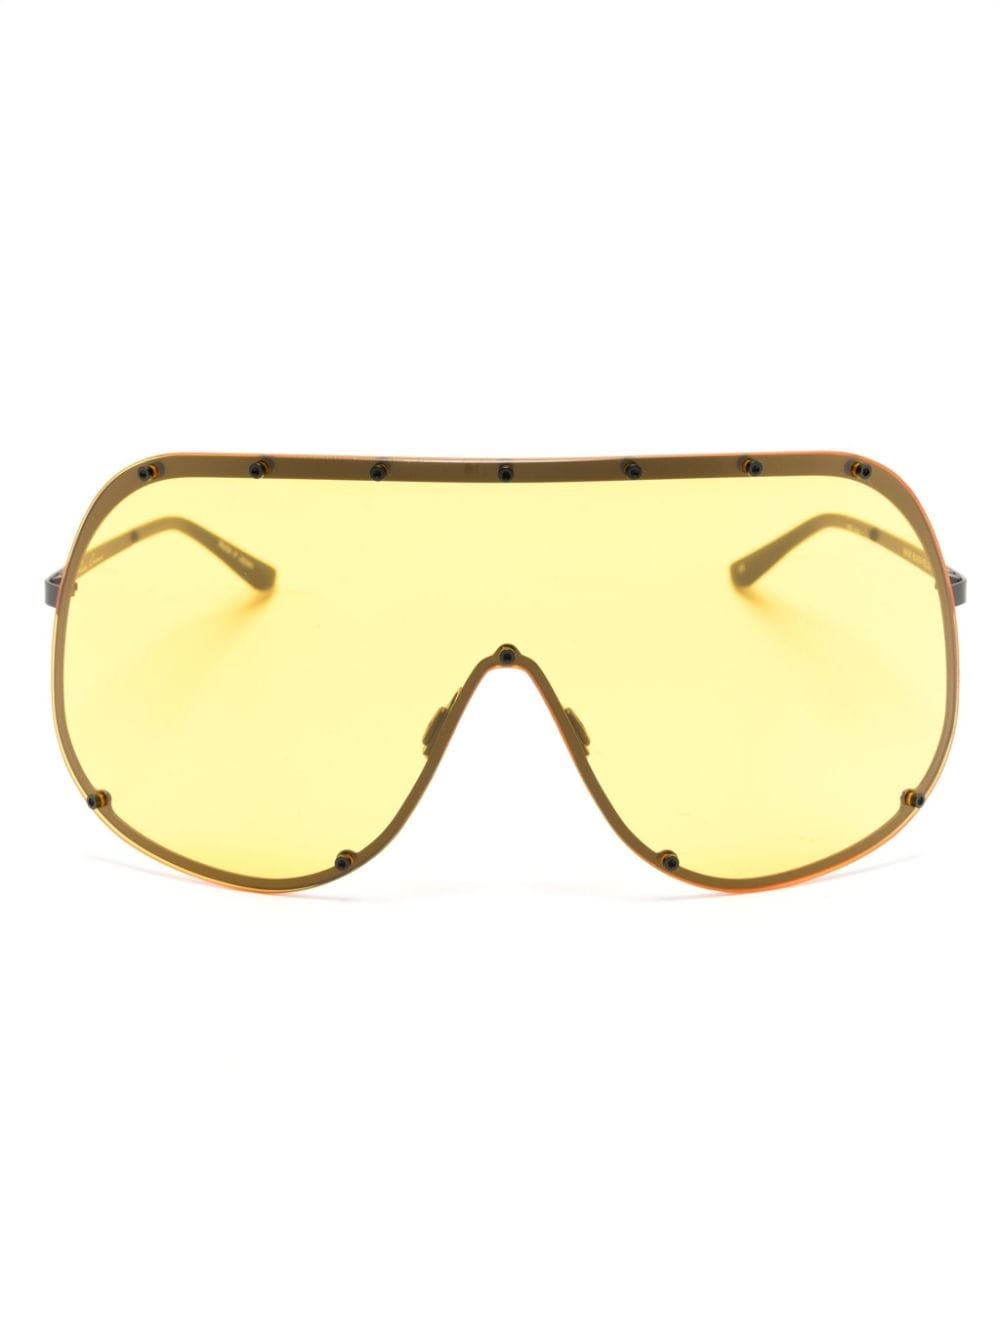 shield-frame sunglasses - 1